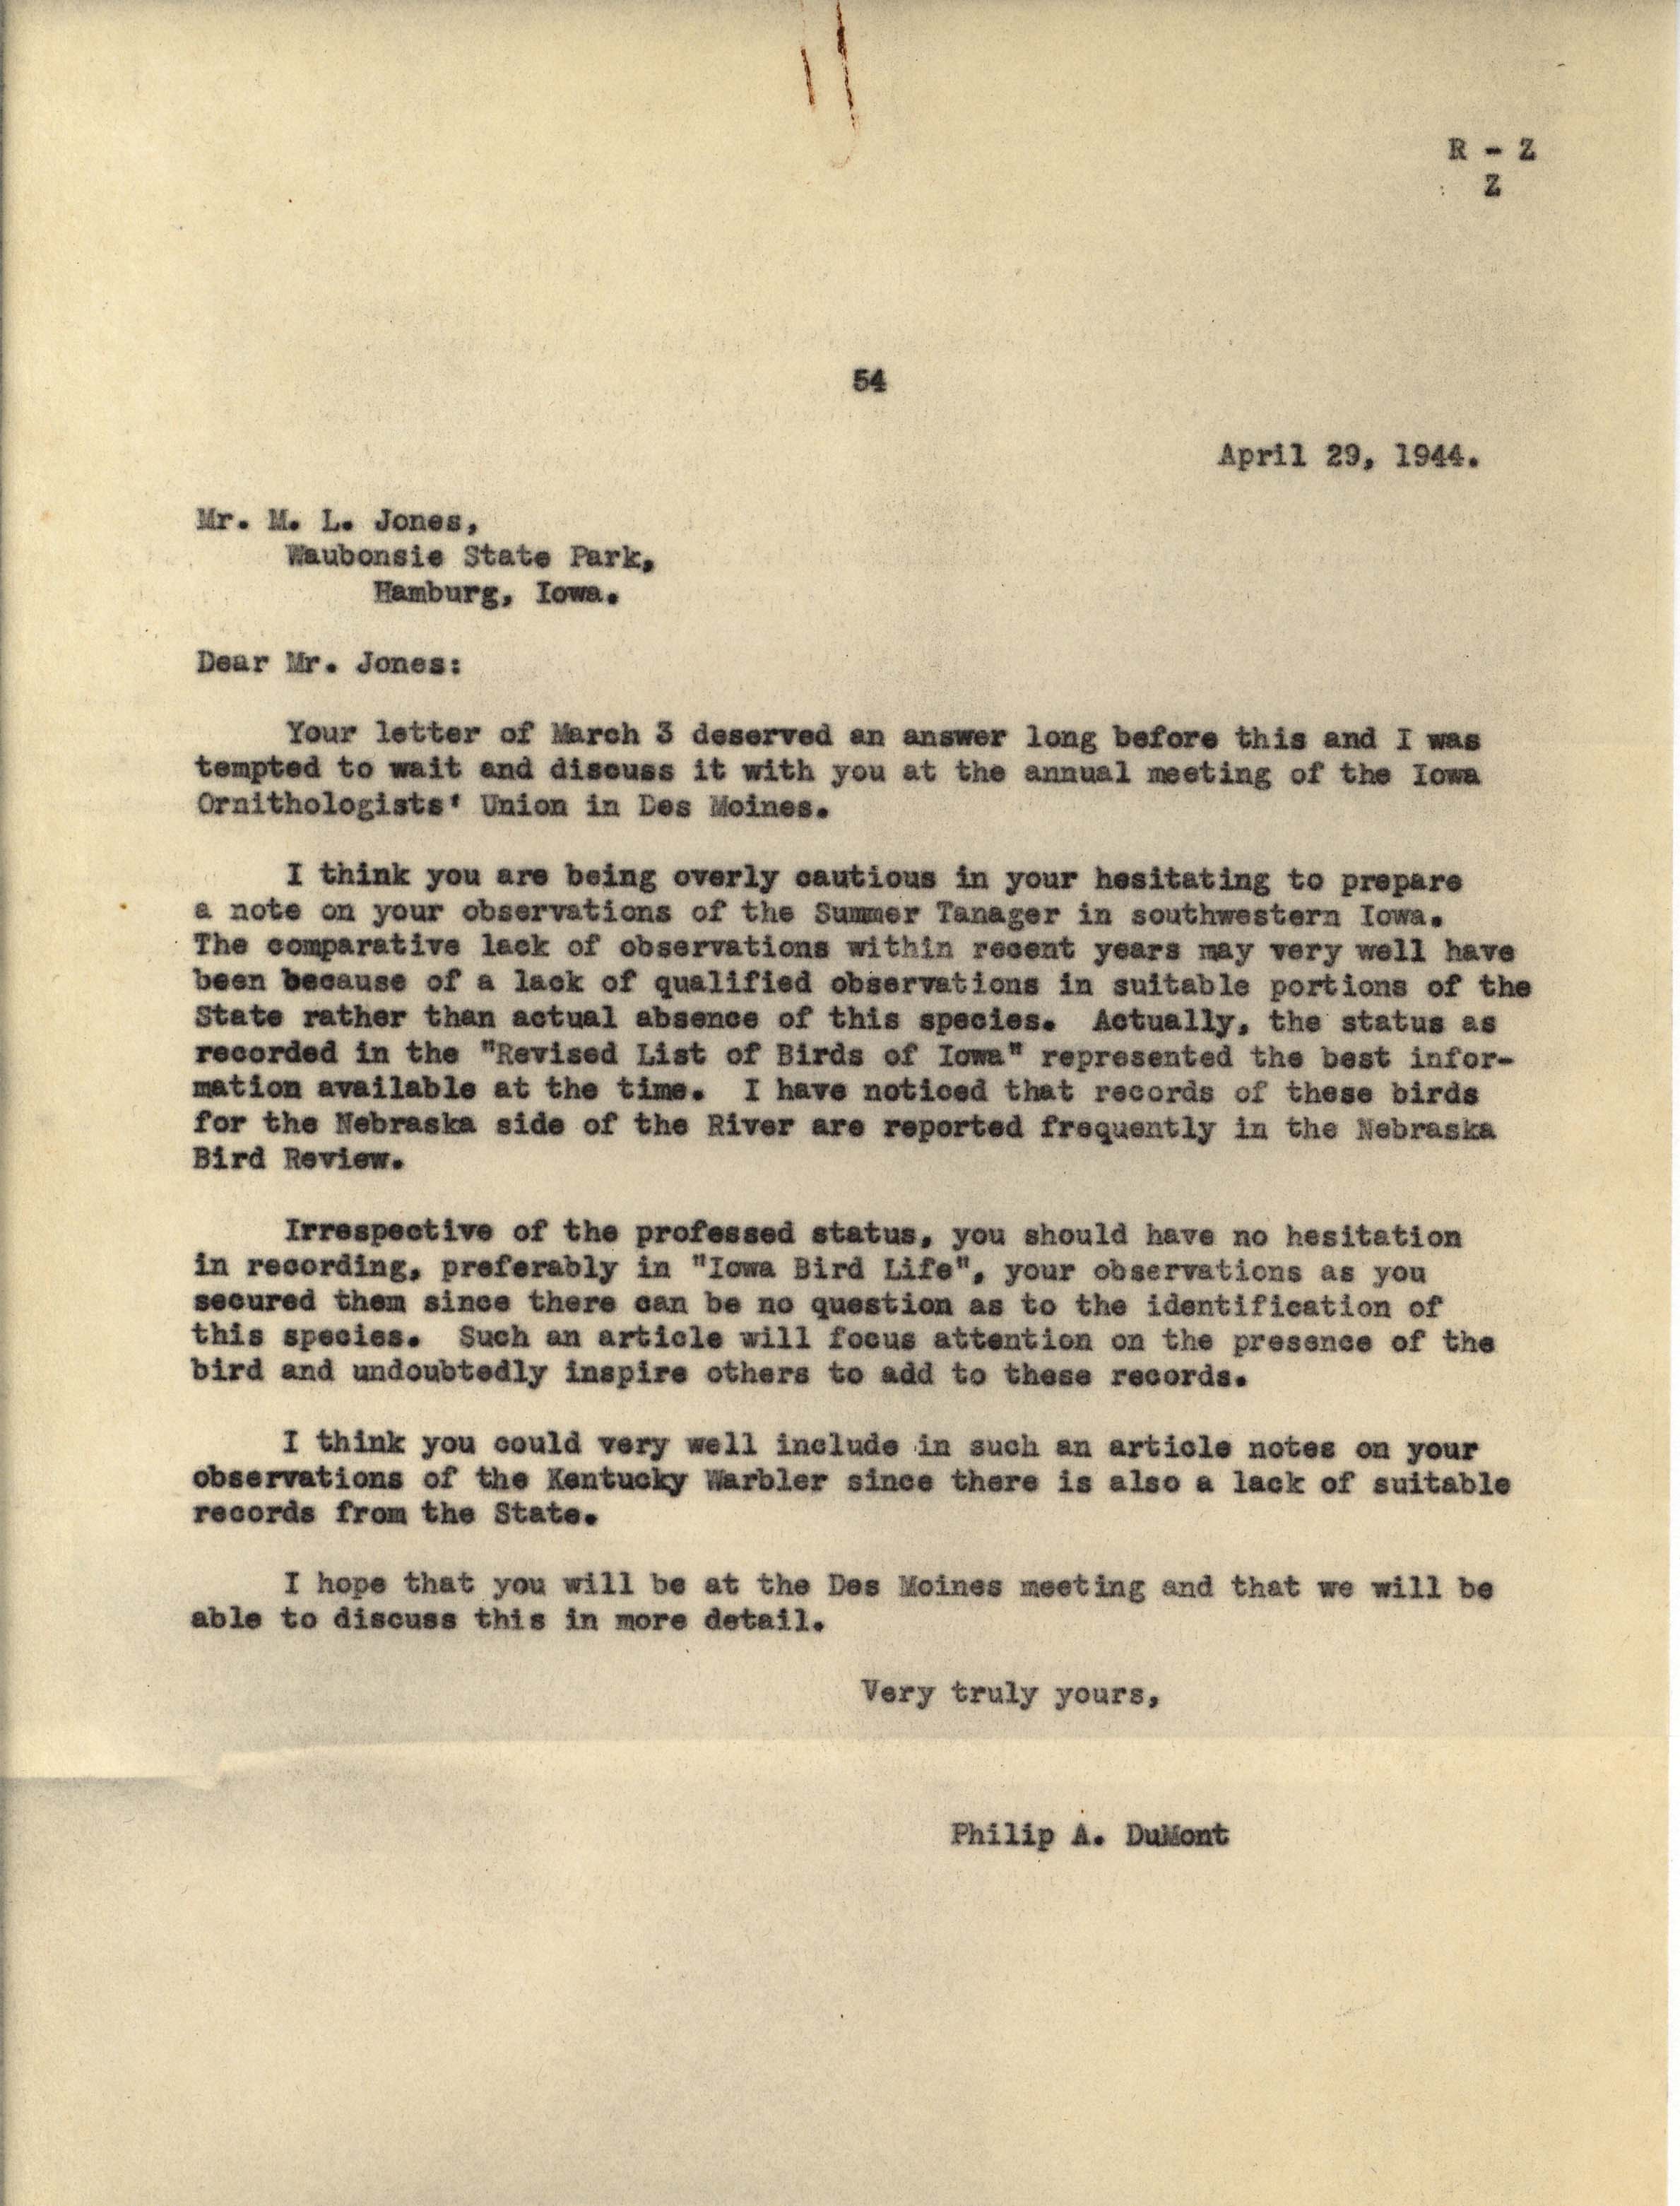 Philip DuMont letter to Myrle Jones regarding the reporting of sightings of rare birds, April 29, 1944